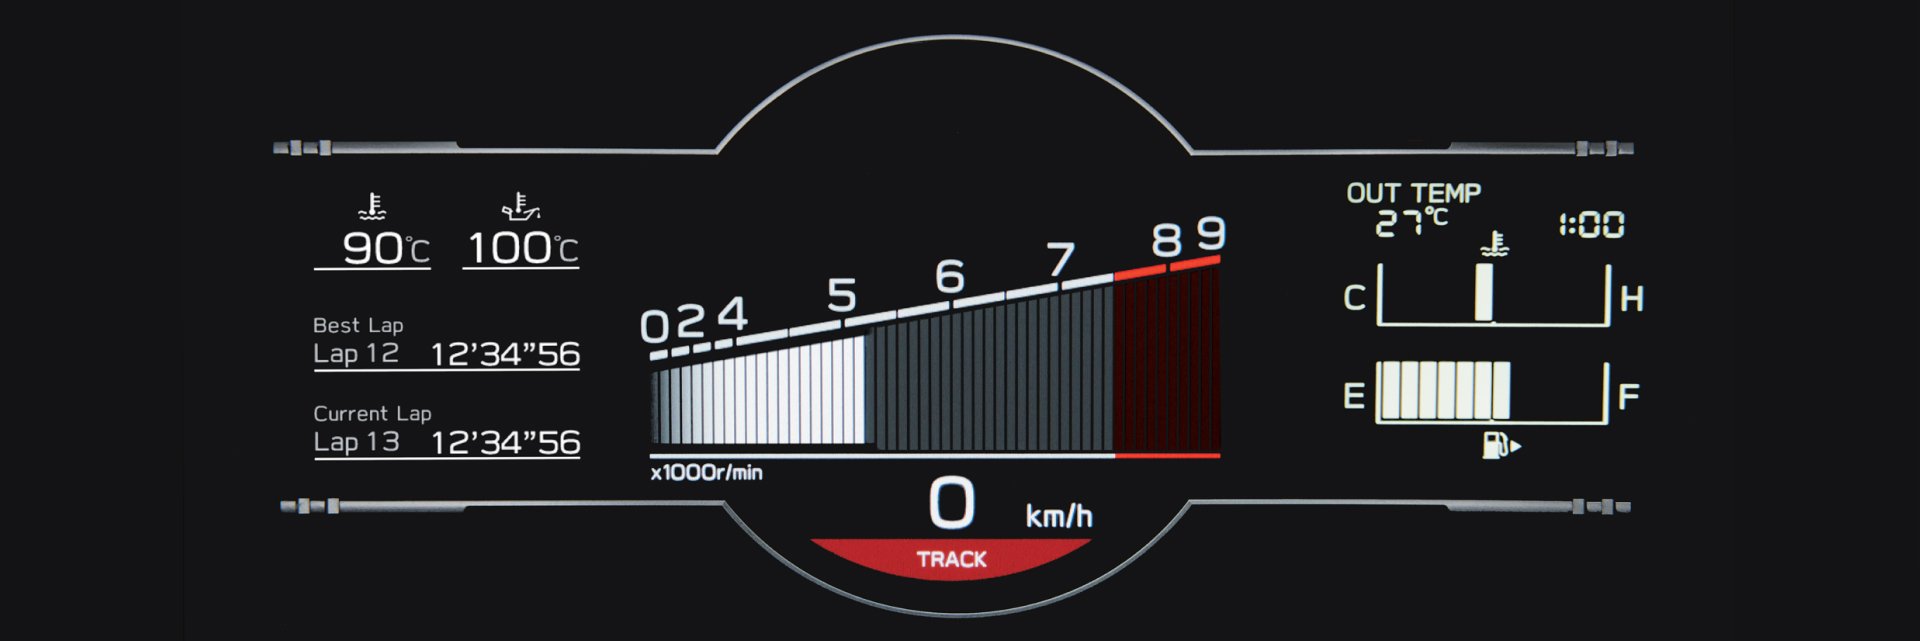 Track mode Image